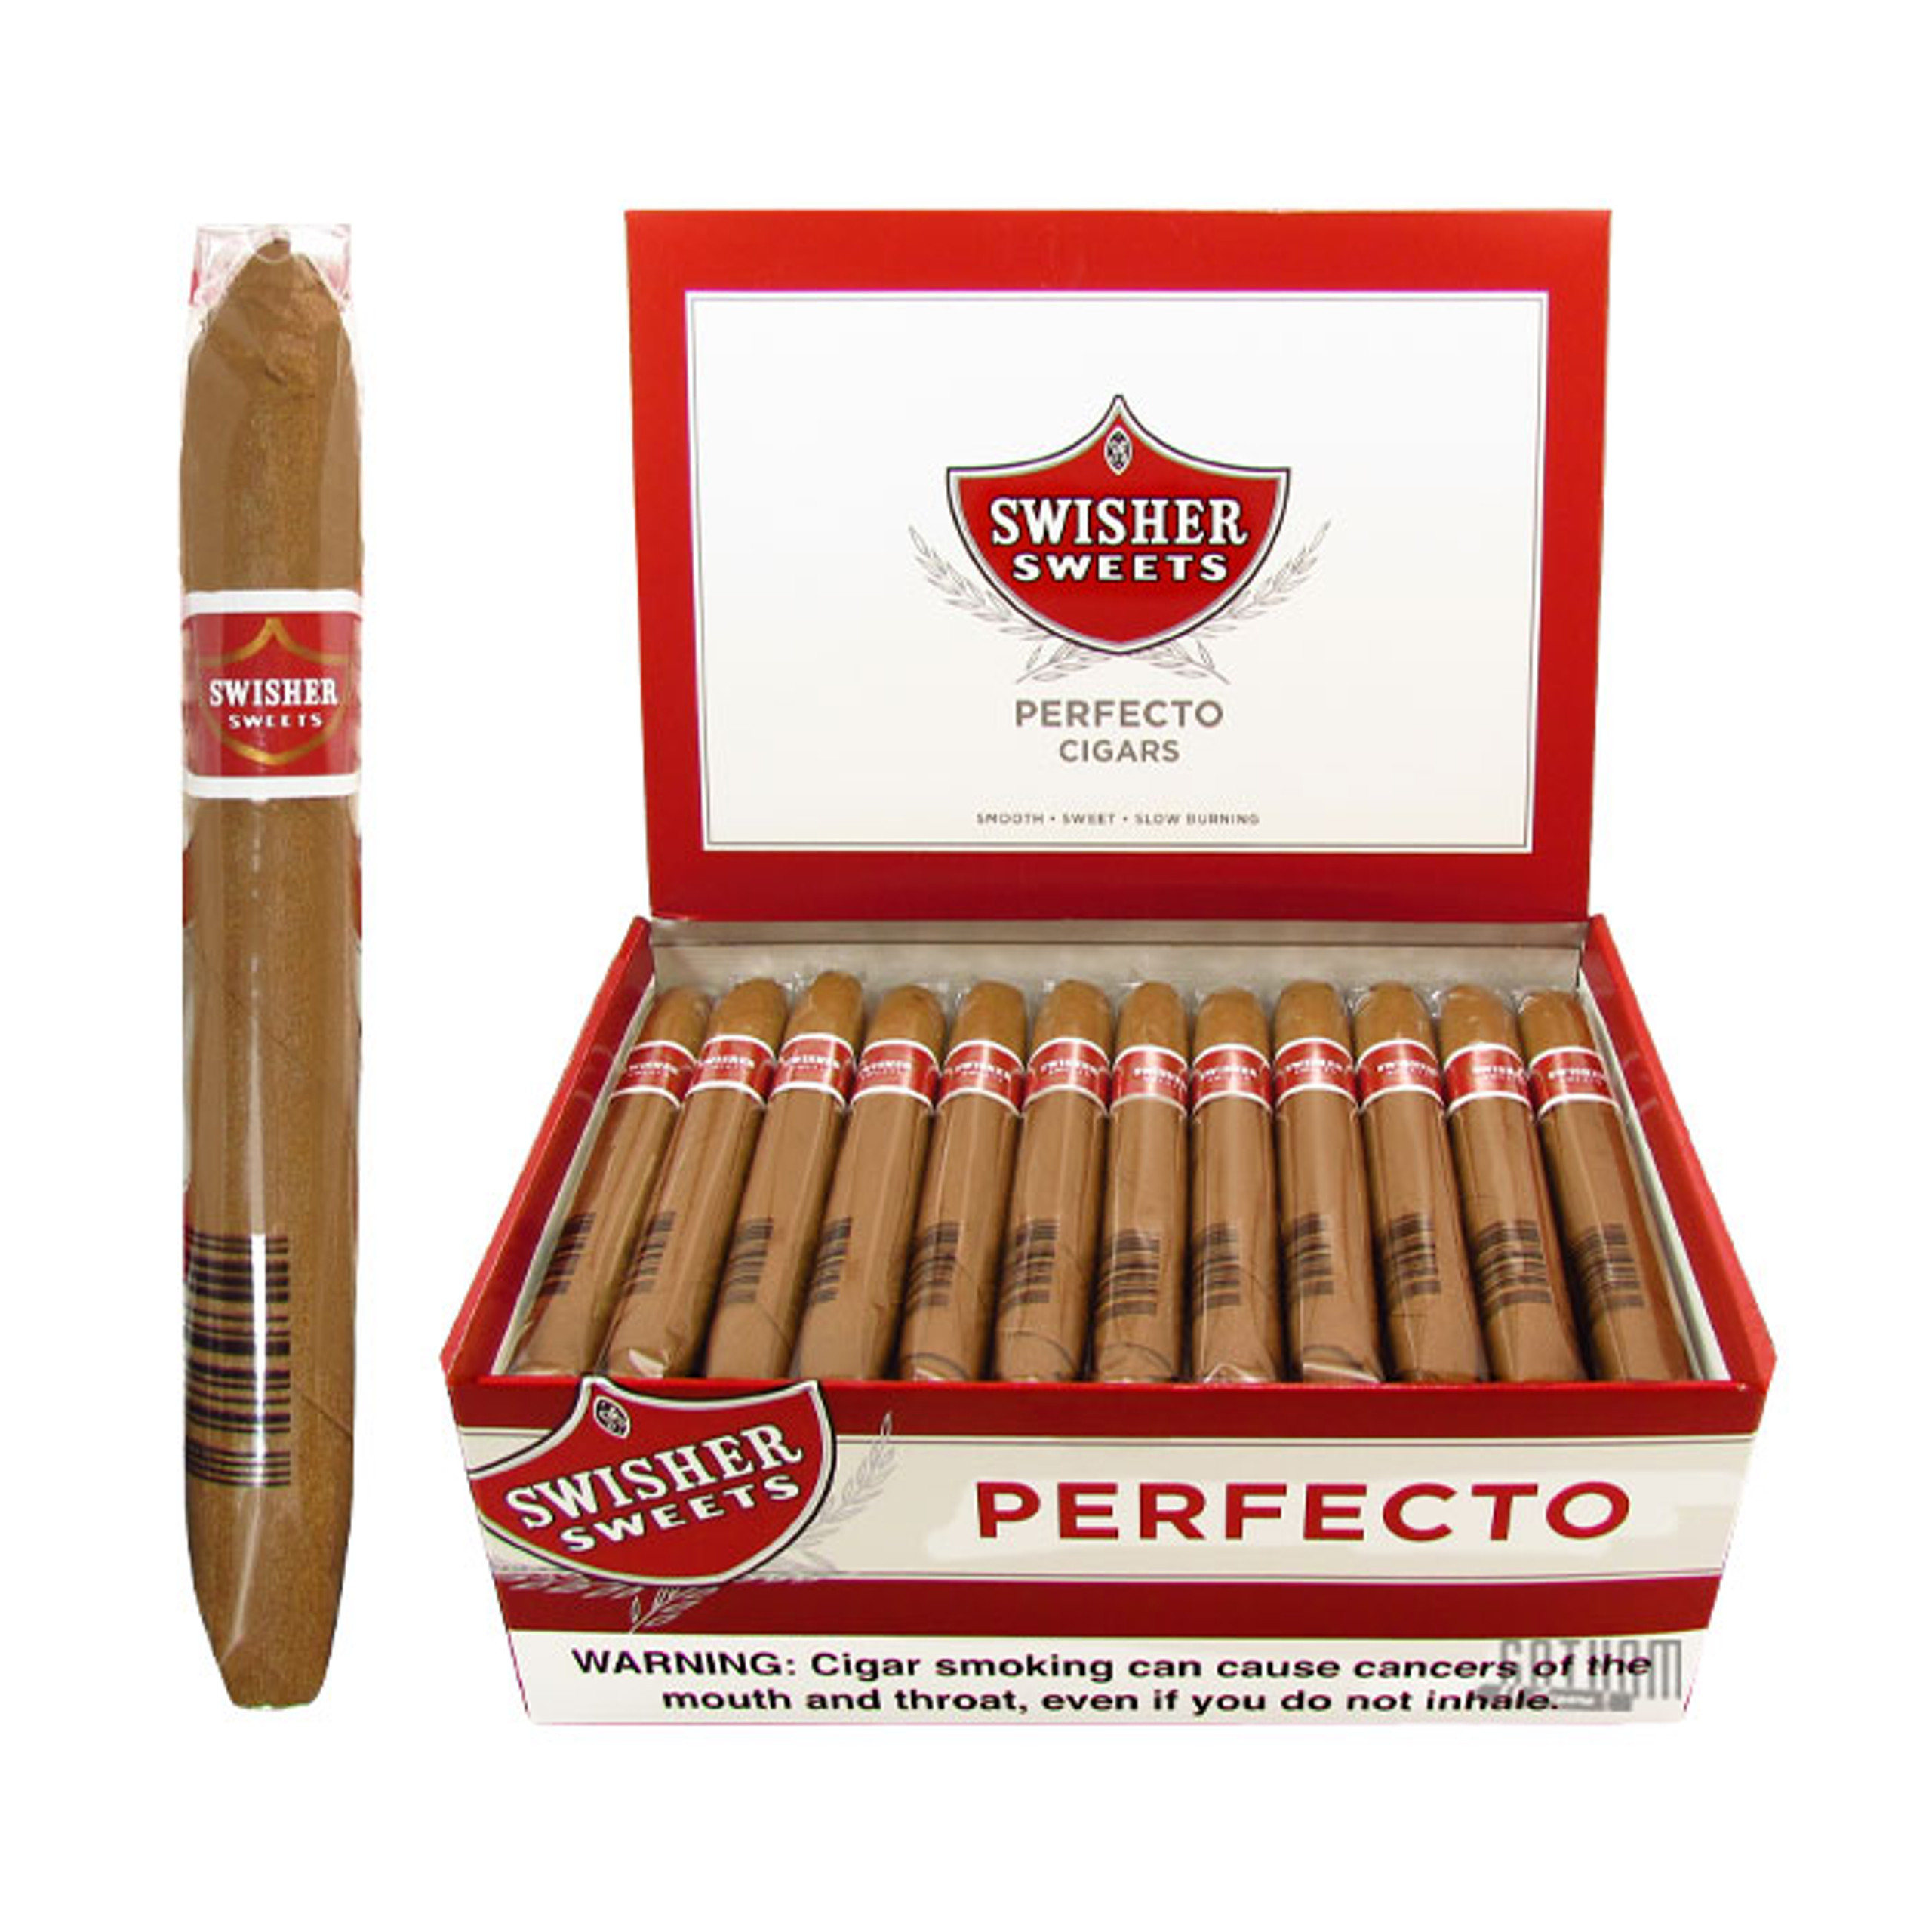 Swisher Sweets Perfecto Box Gotham Cigars